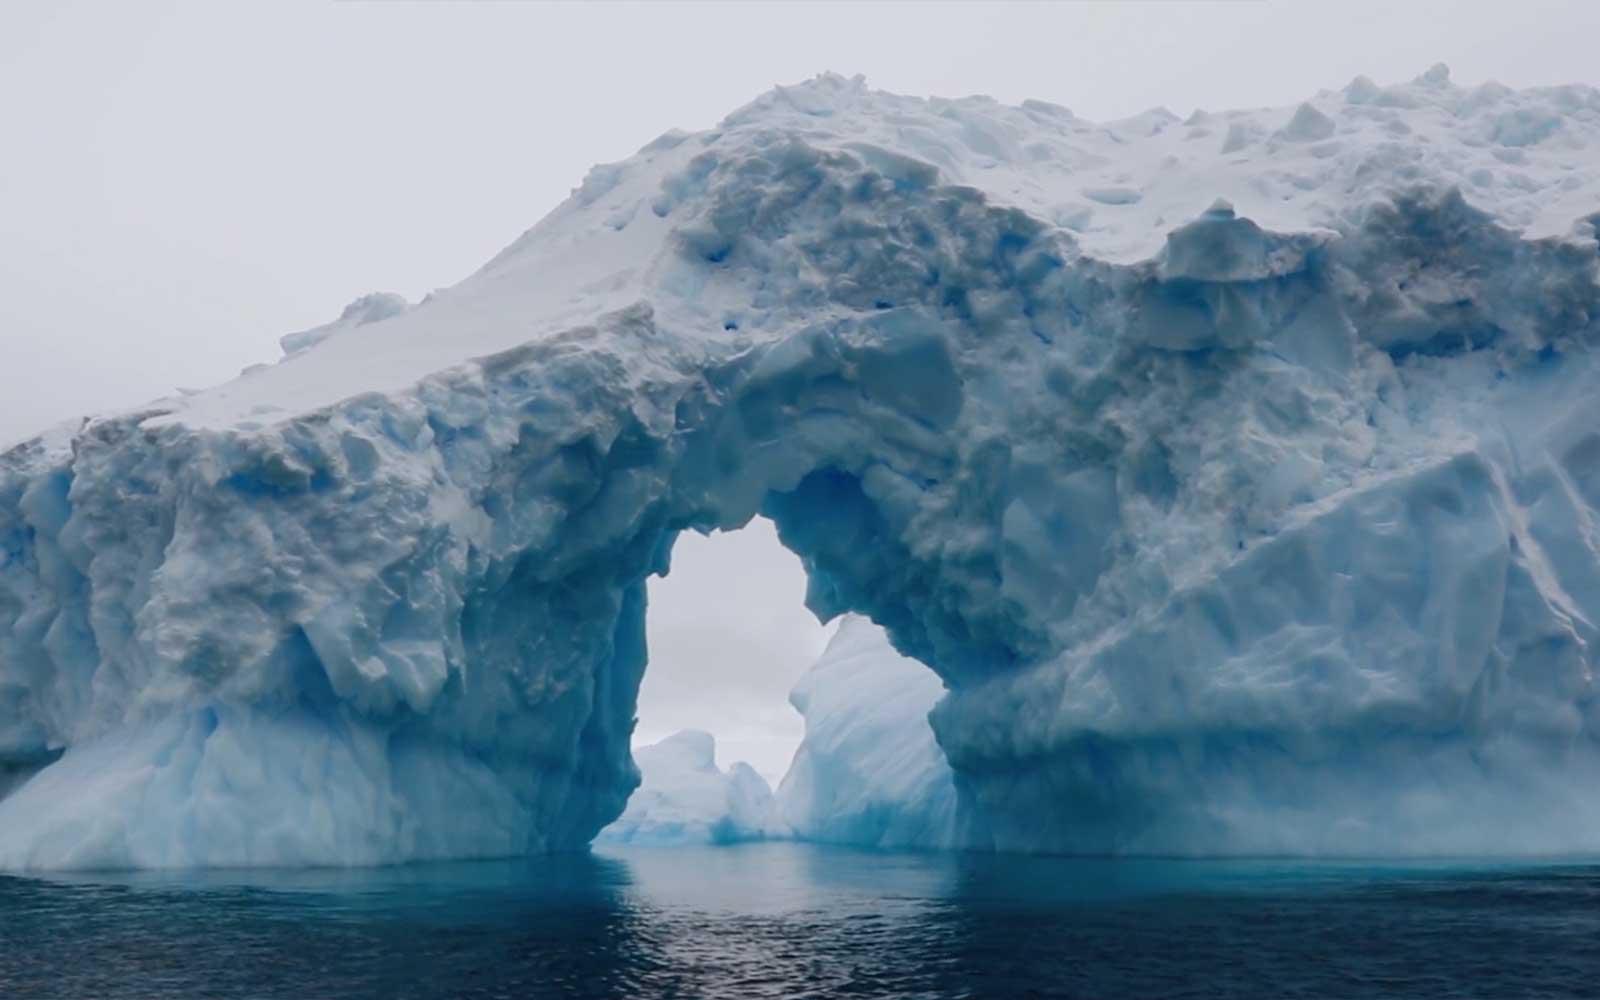 Zaria Forman, Ode to An Iceberg, 360 View, Whale Bay, Antarctica, Film still, 2017.